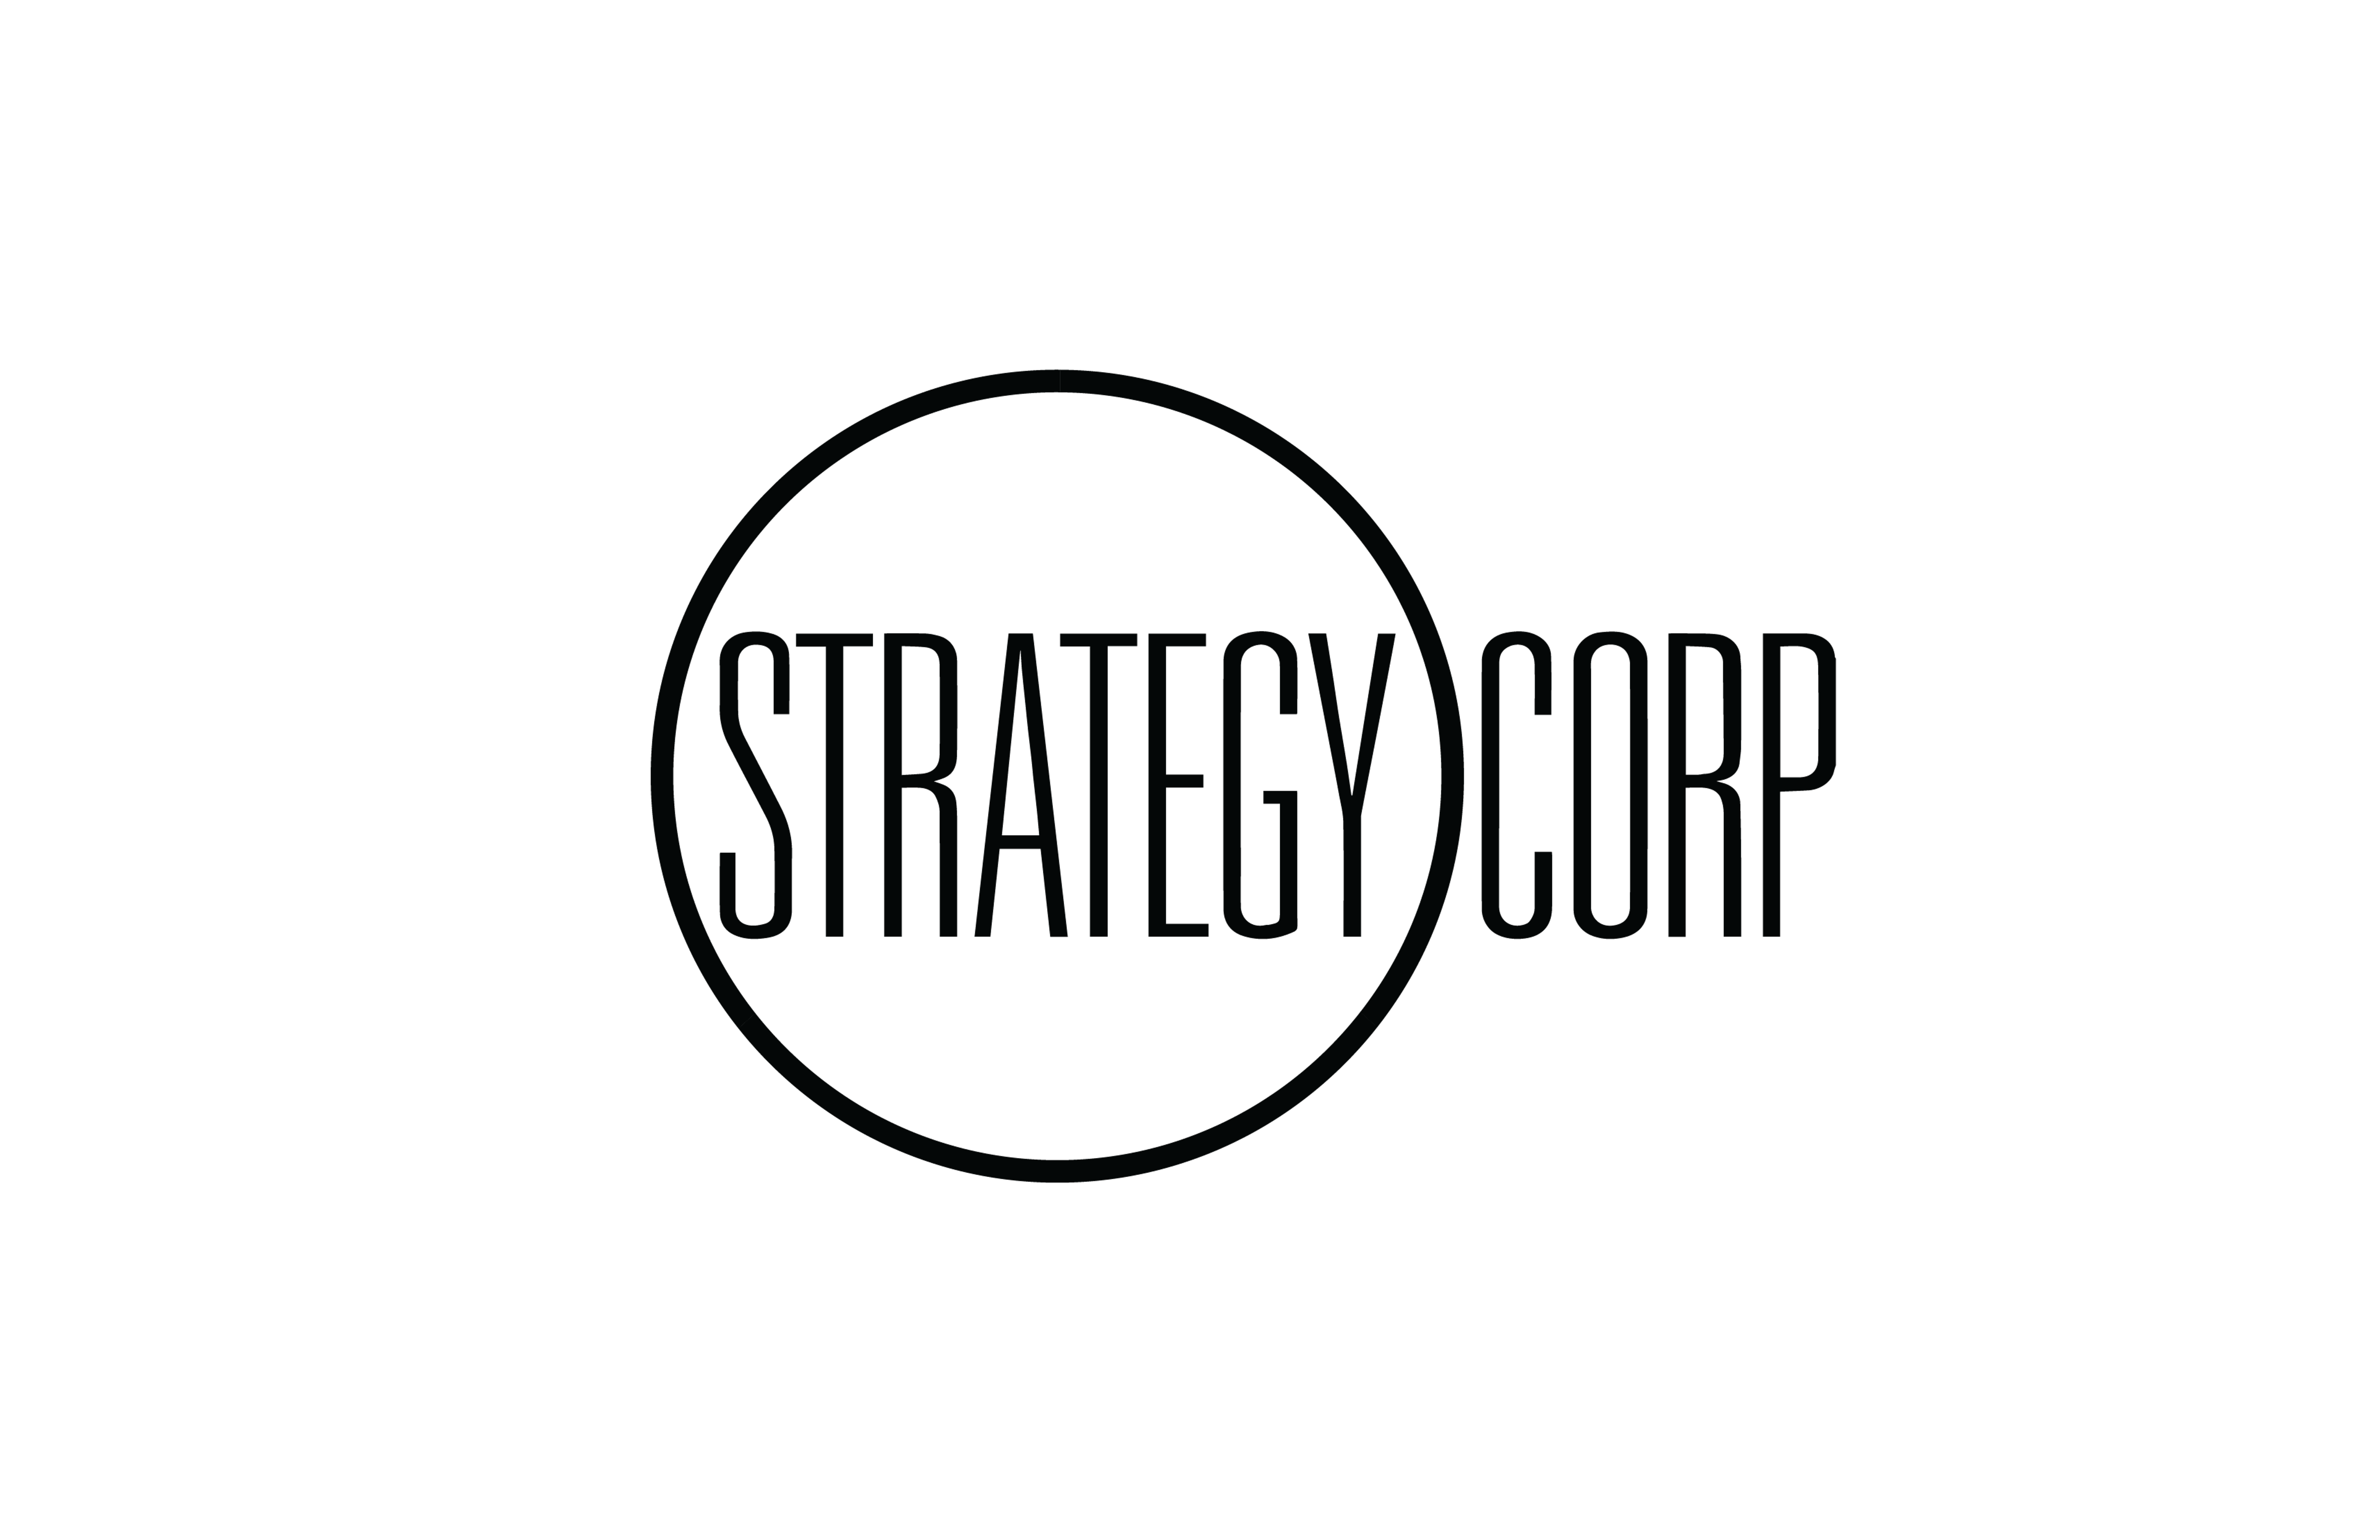 Strategy Corp